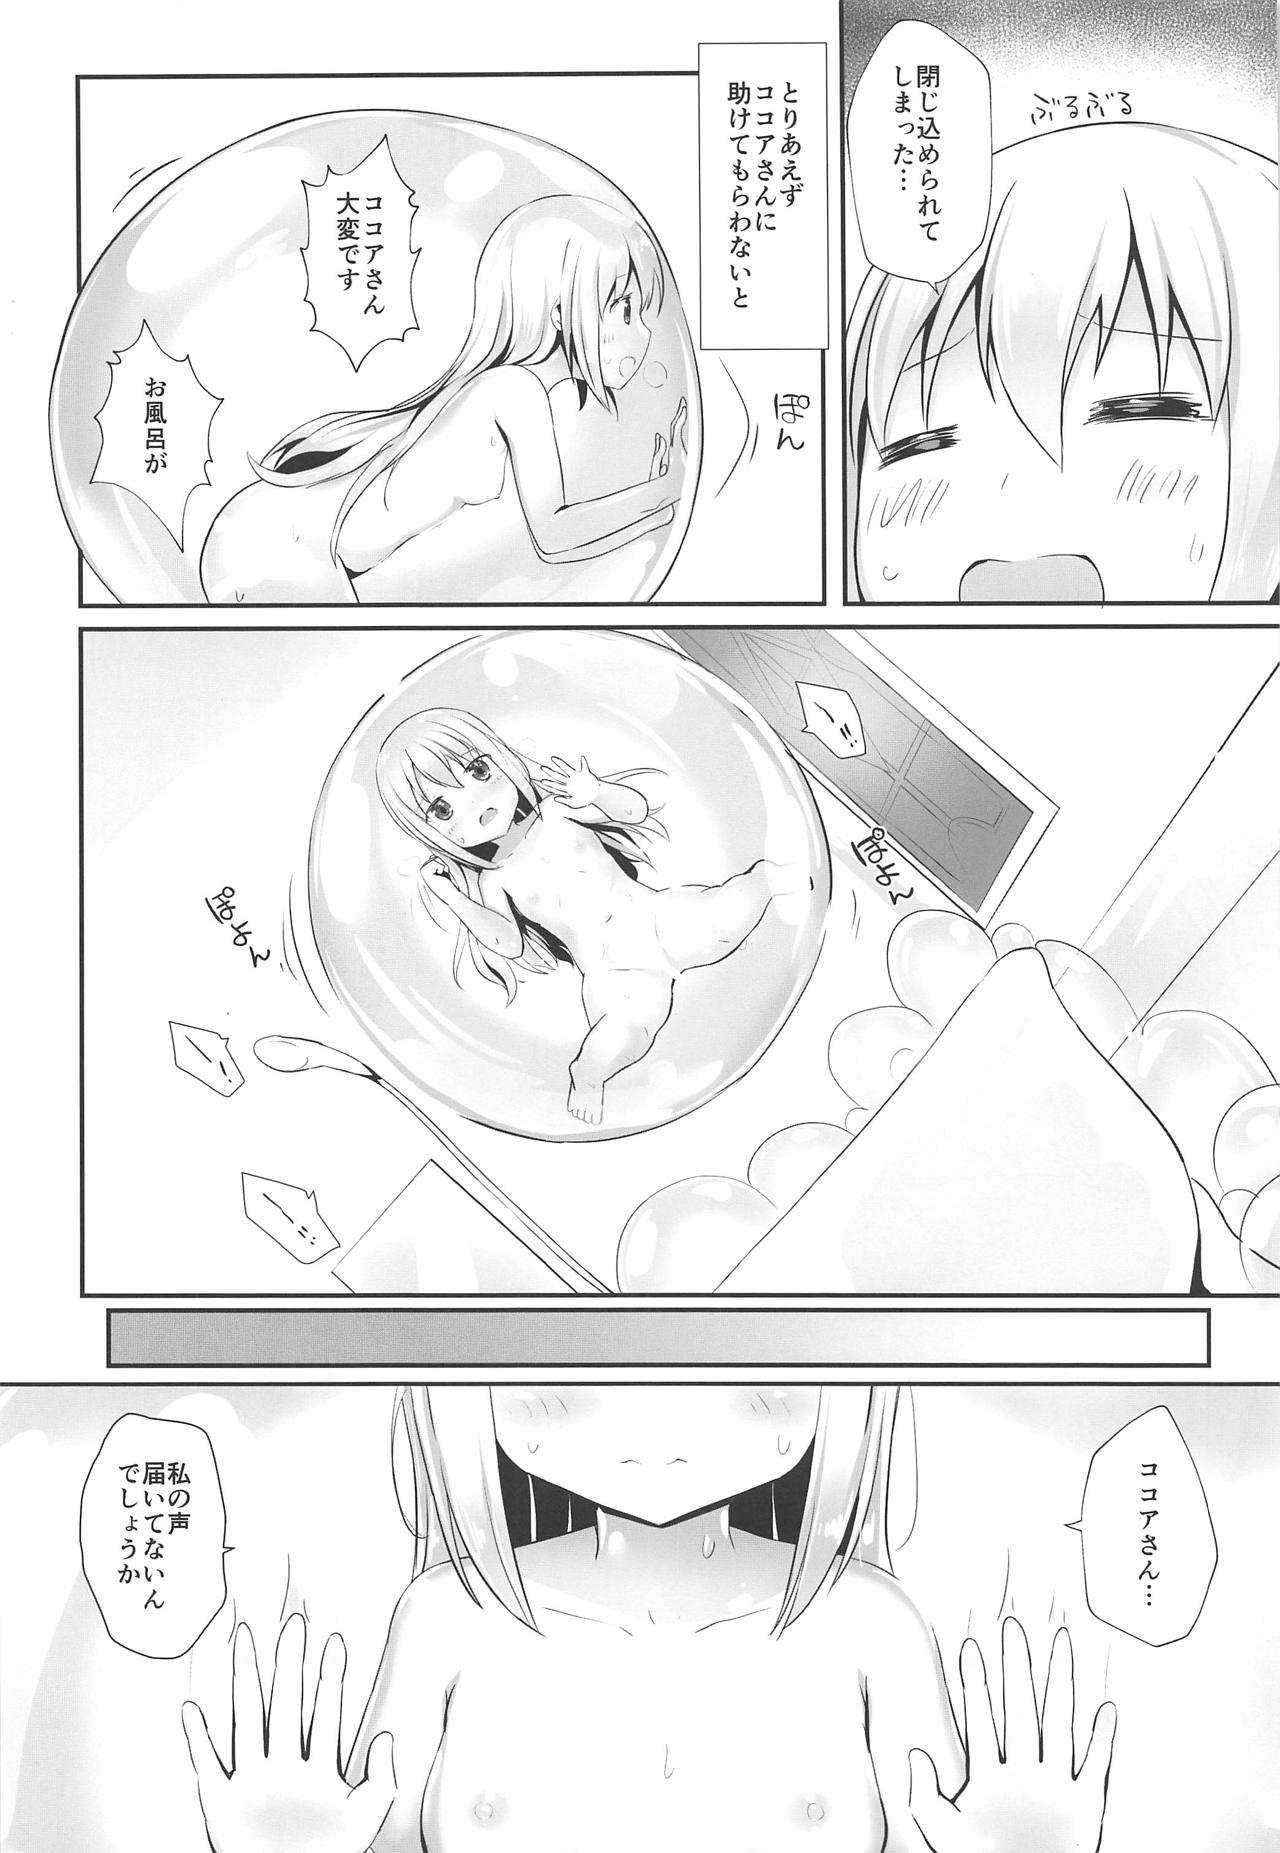 Bubble Butt Awaawa KokoChino - Gochuumon wa usagi desu ka Hooker - Page 5